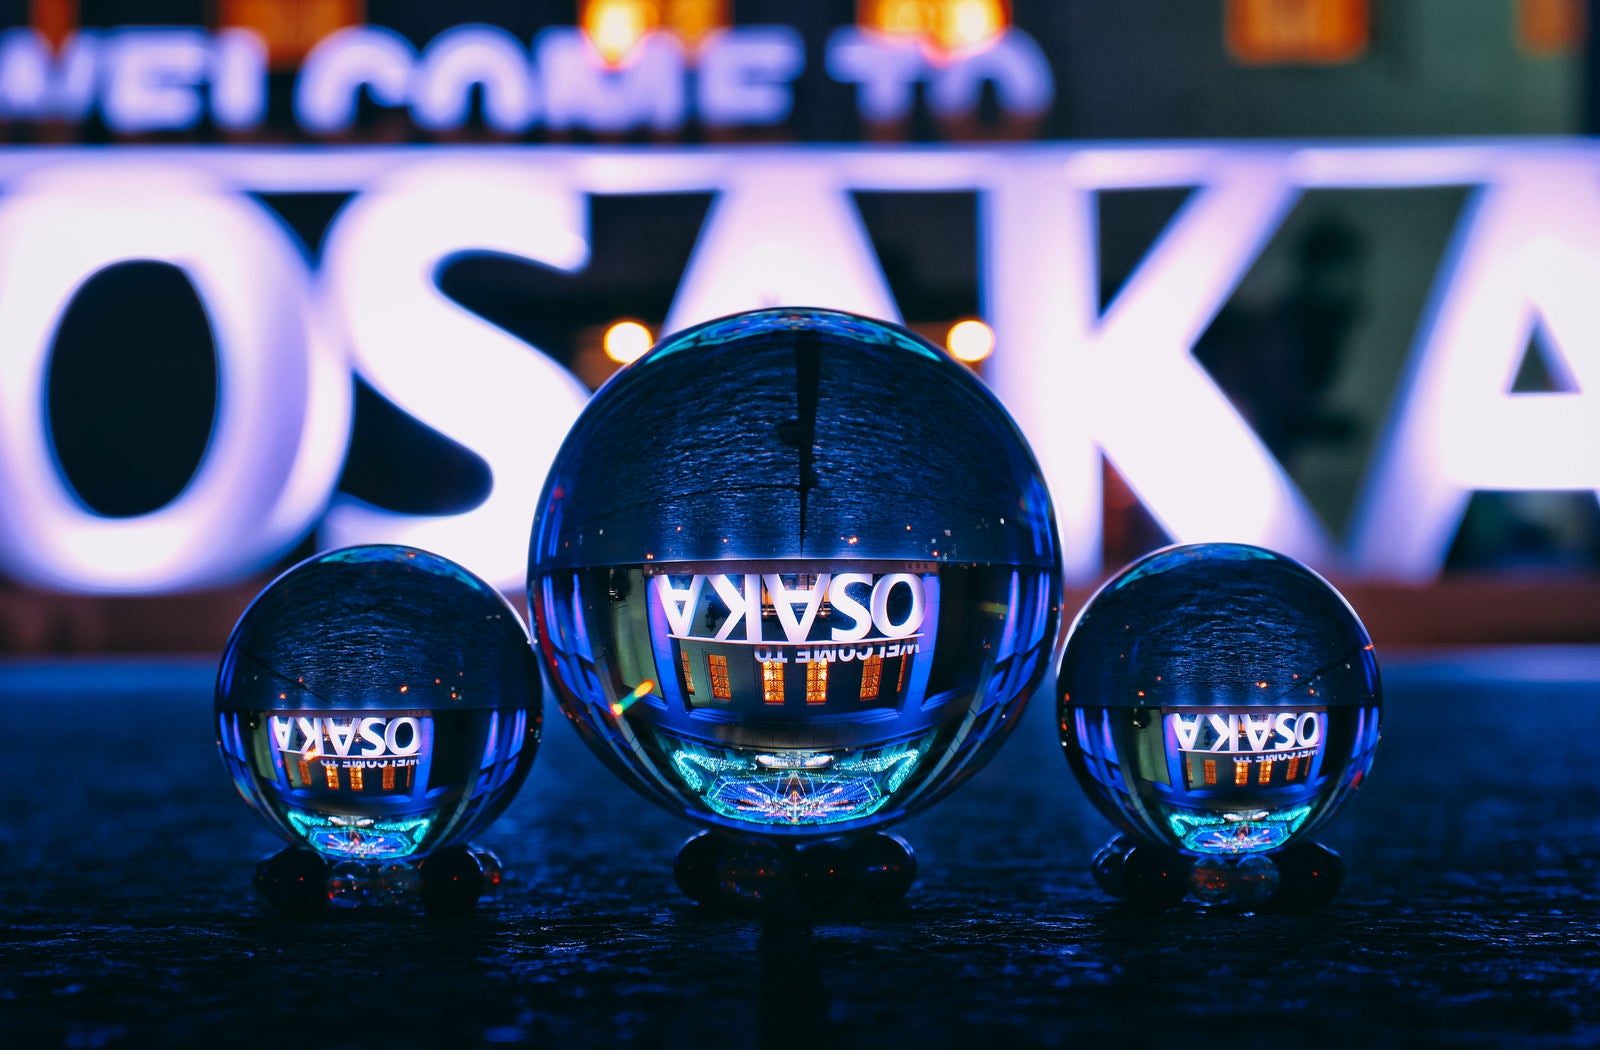 「OSAKAのオブジェ前に並ぶ水晶玉」の写真